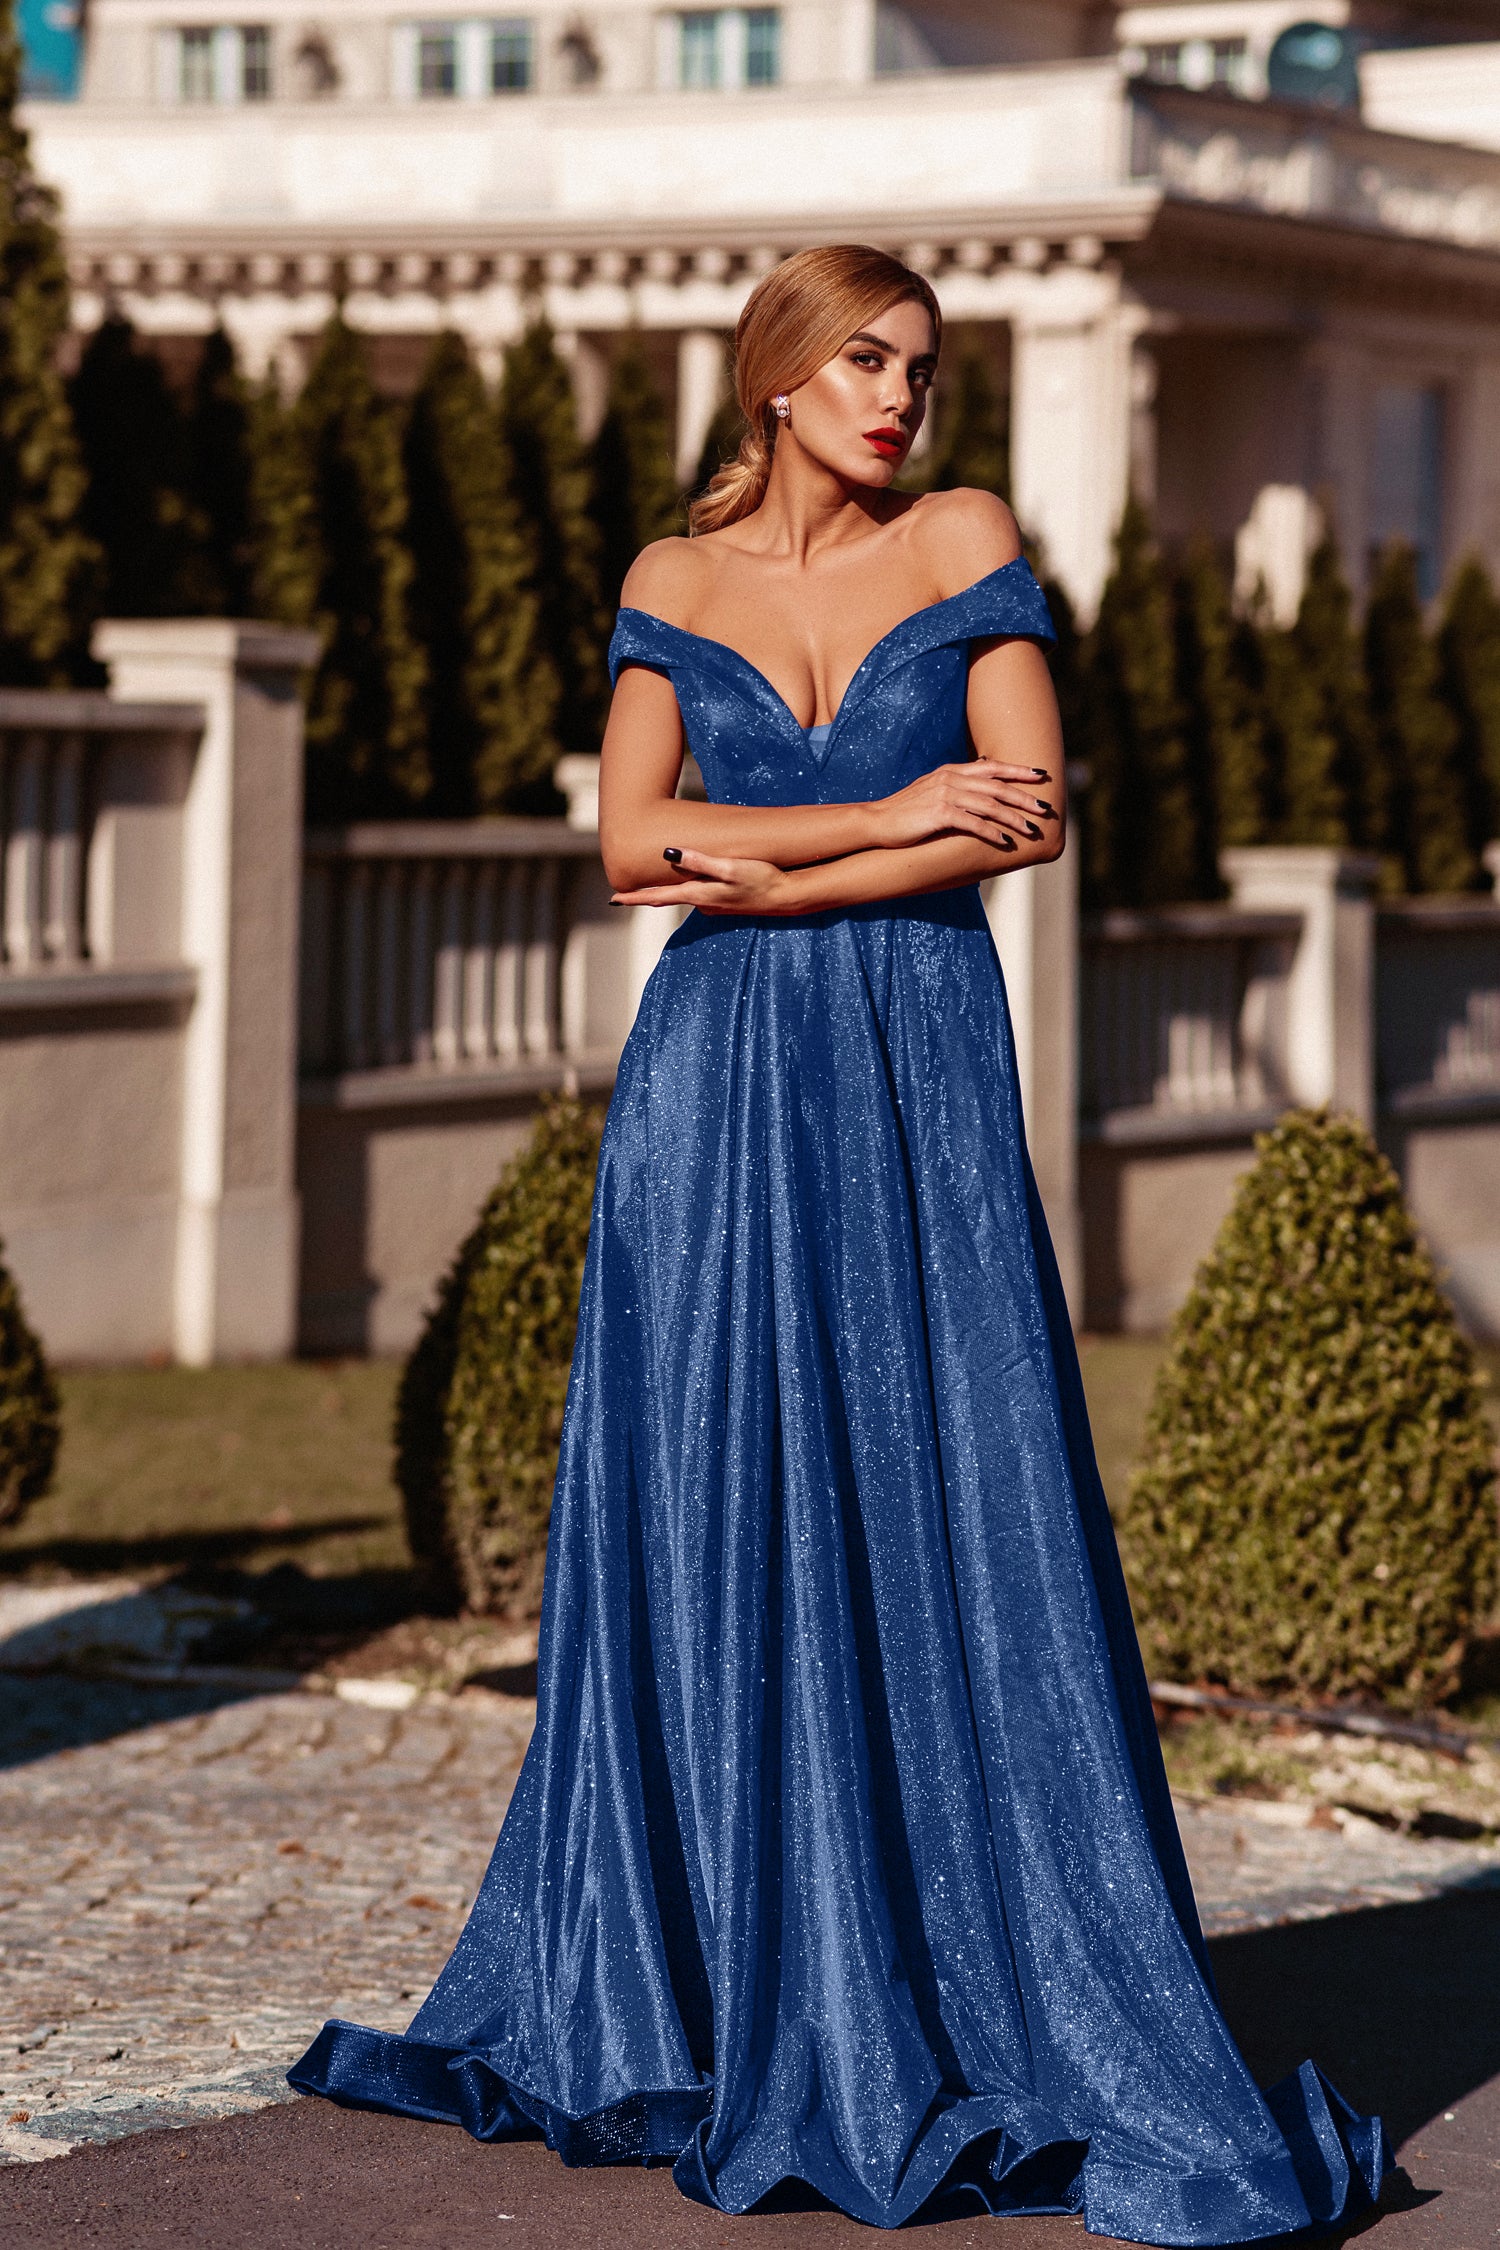 Tina Holly Couture Designer TW028 Indigo Glitter Formal Dress w Over Skirt